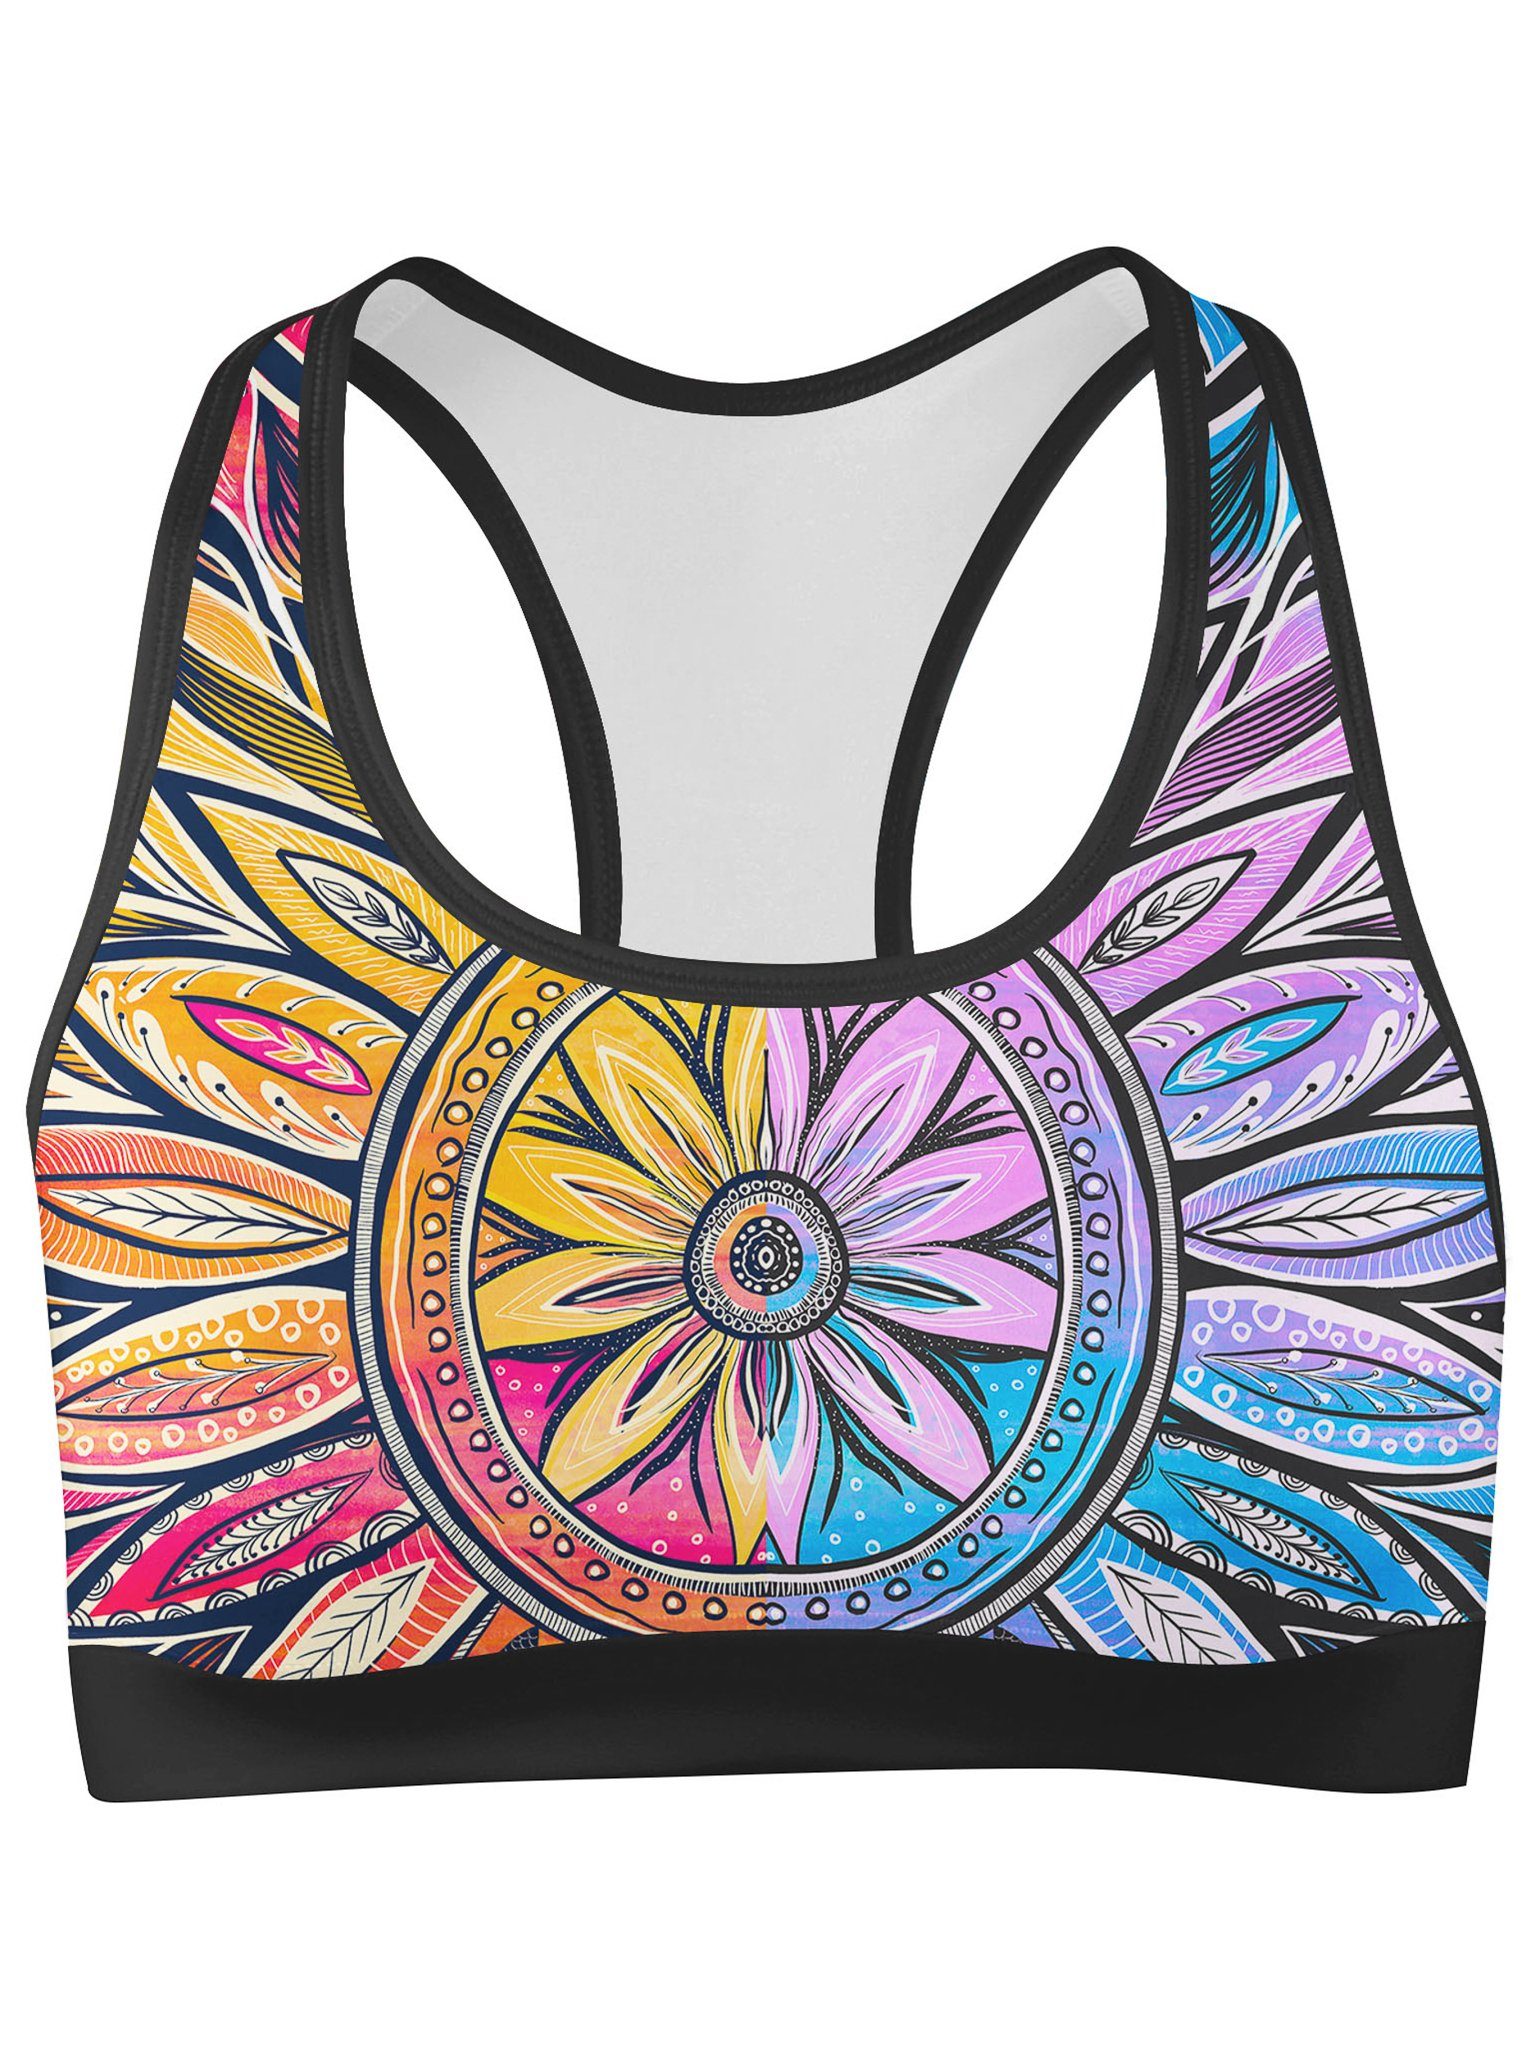 Mandala Infinity Bra - Sports bra Women's